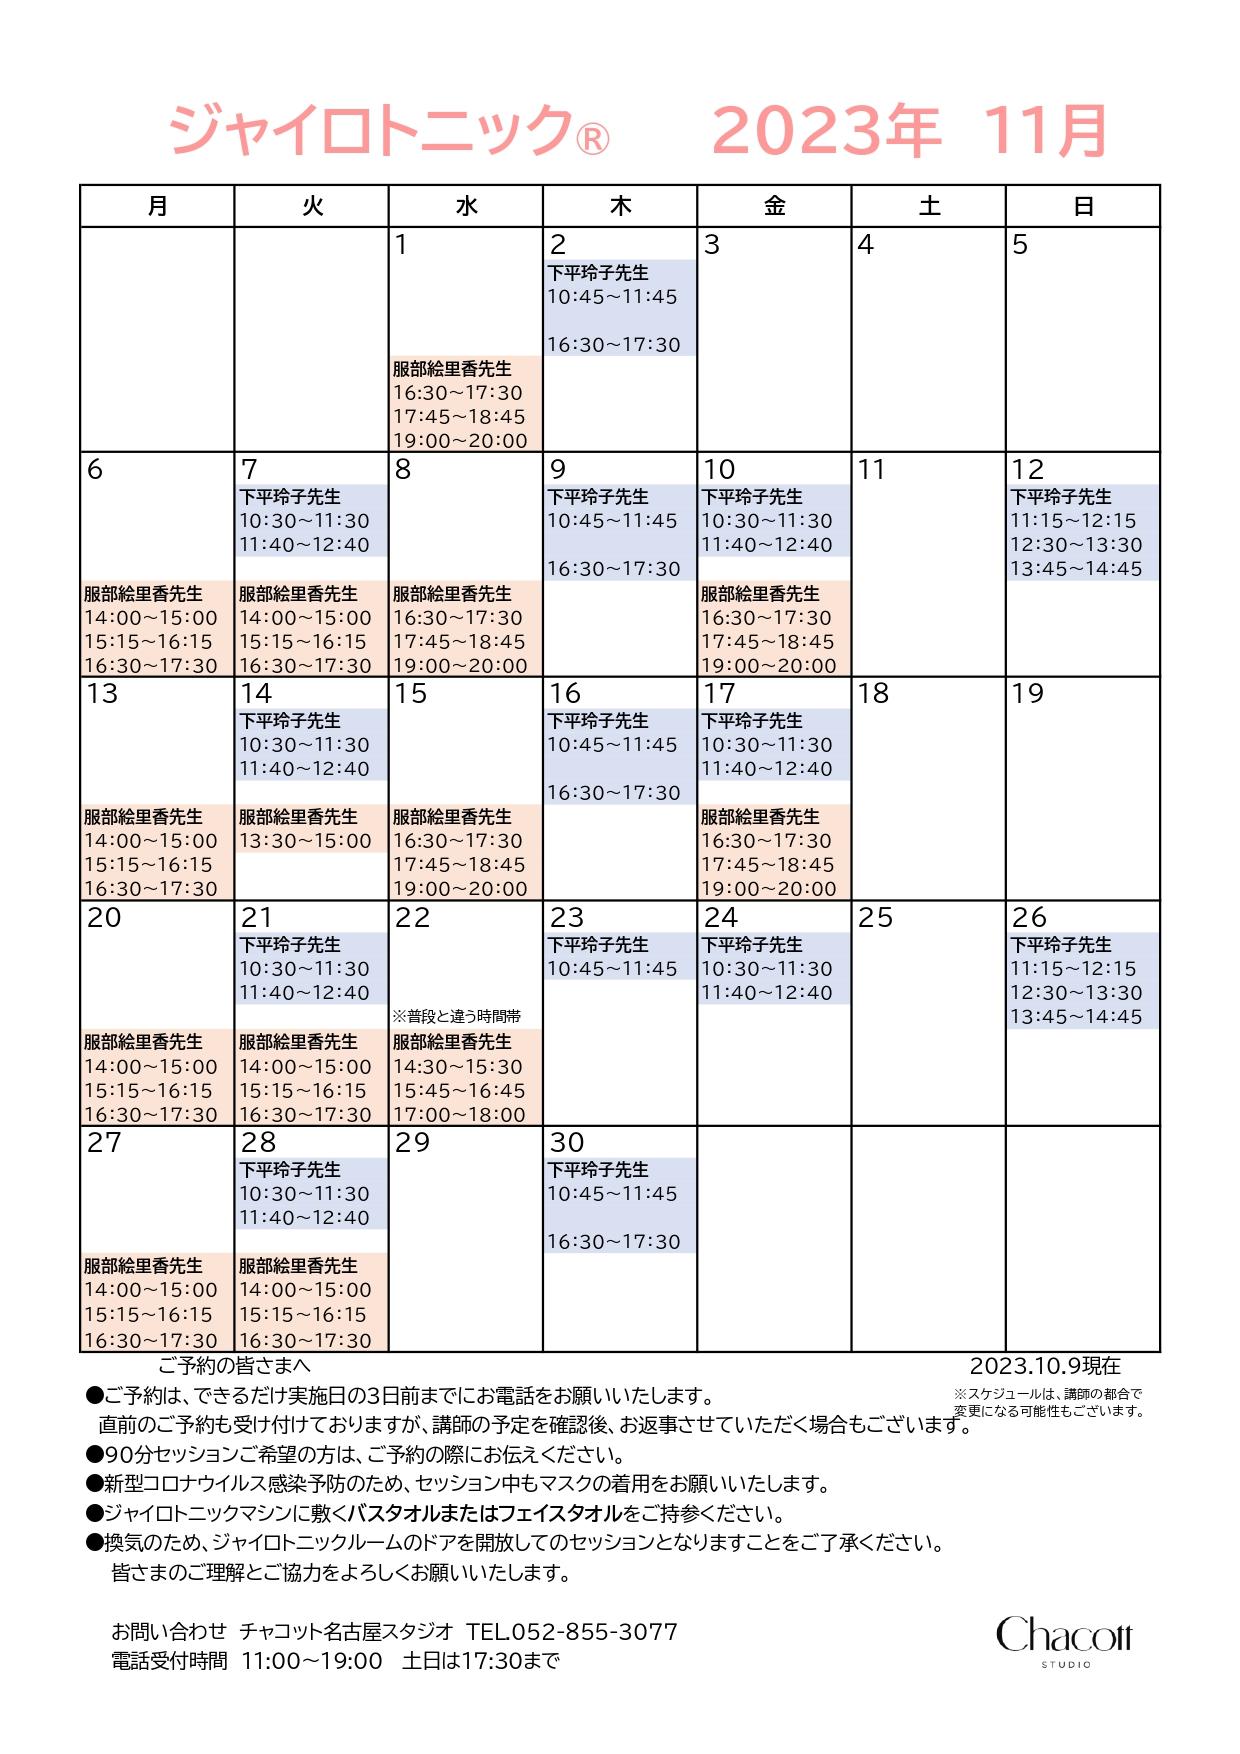 nagoya_202311_timetable.jpg